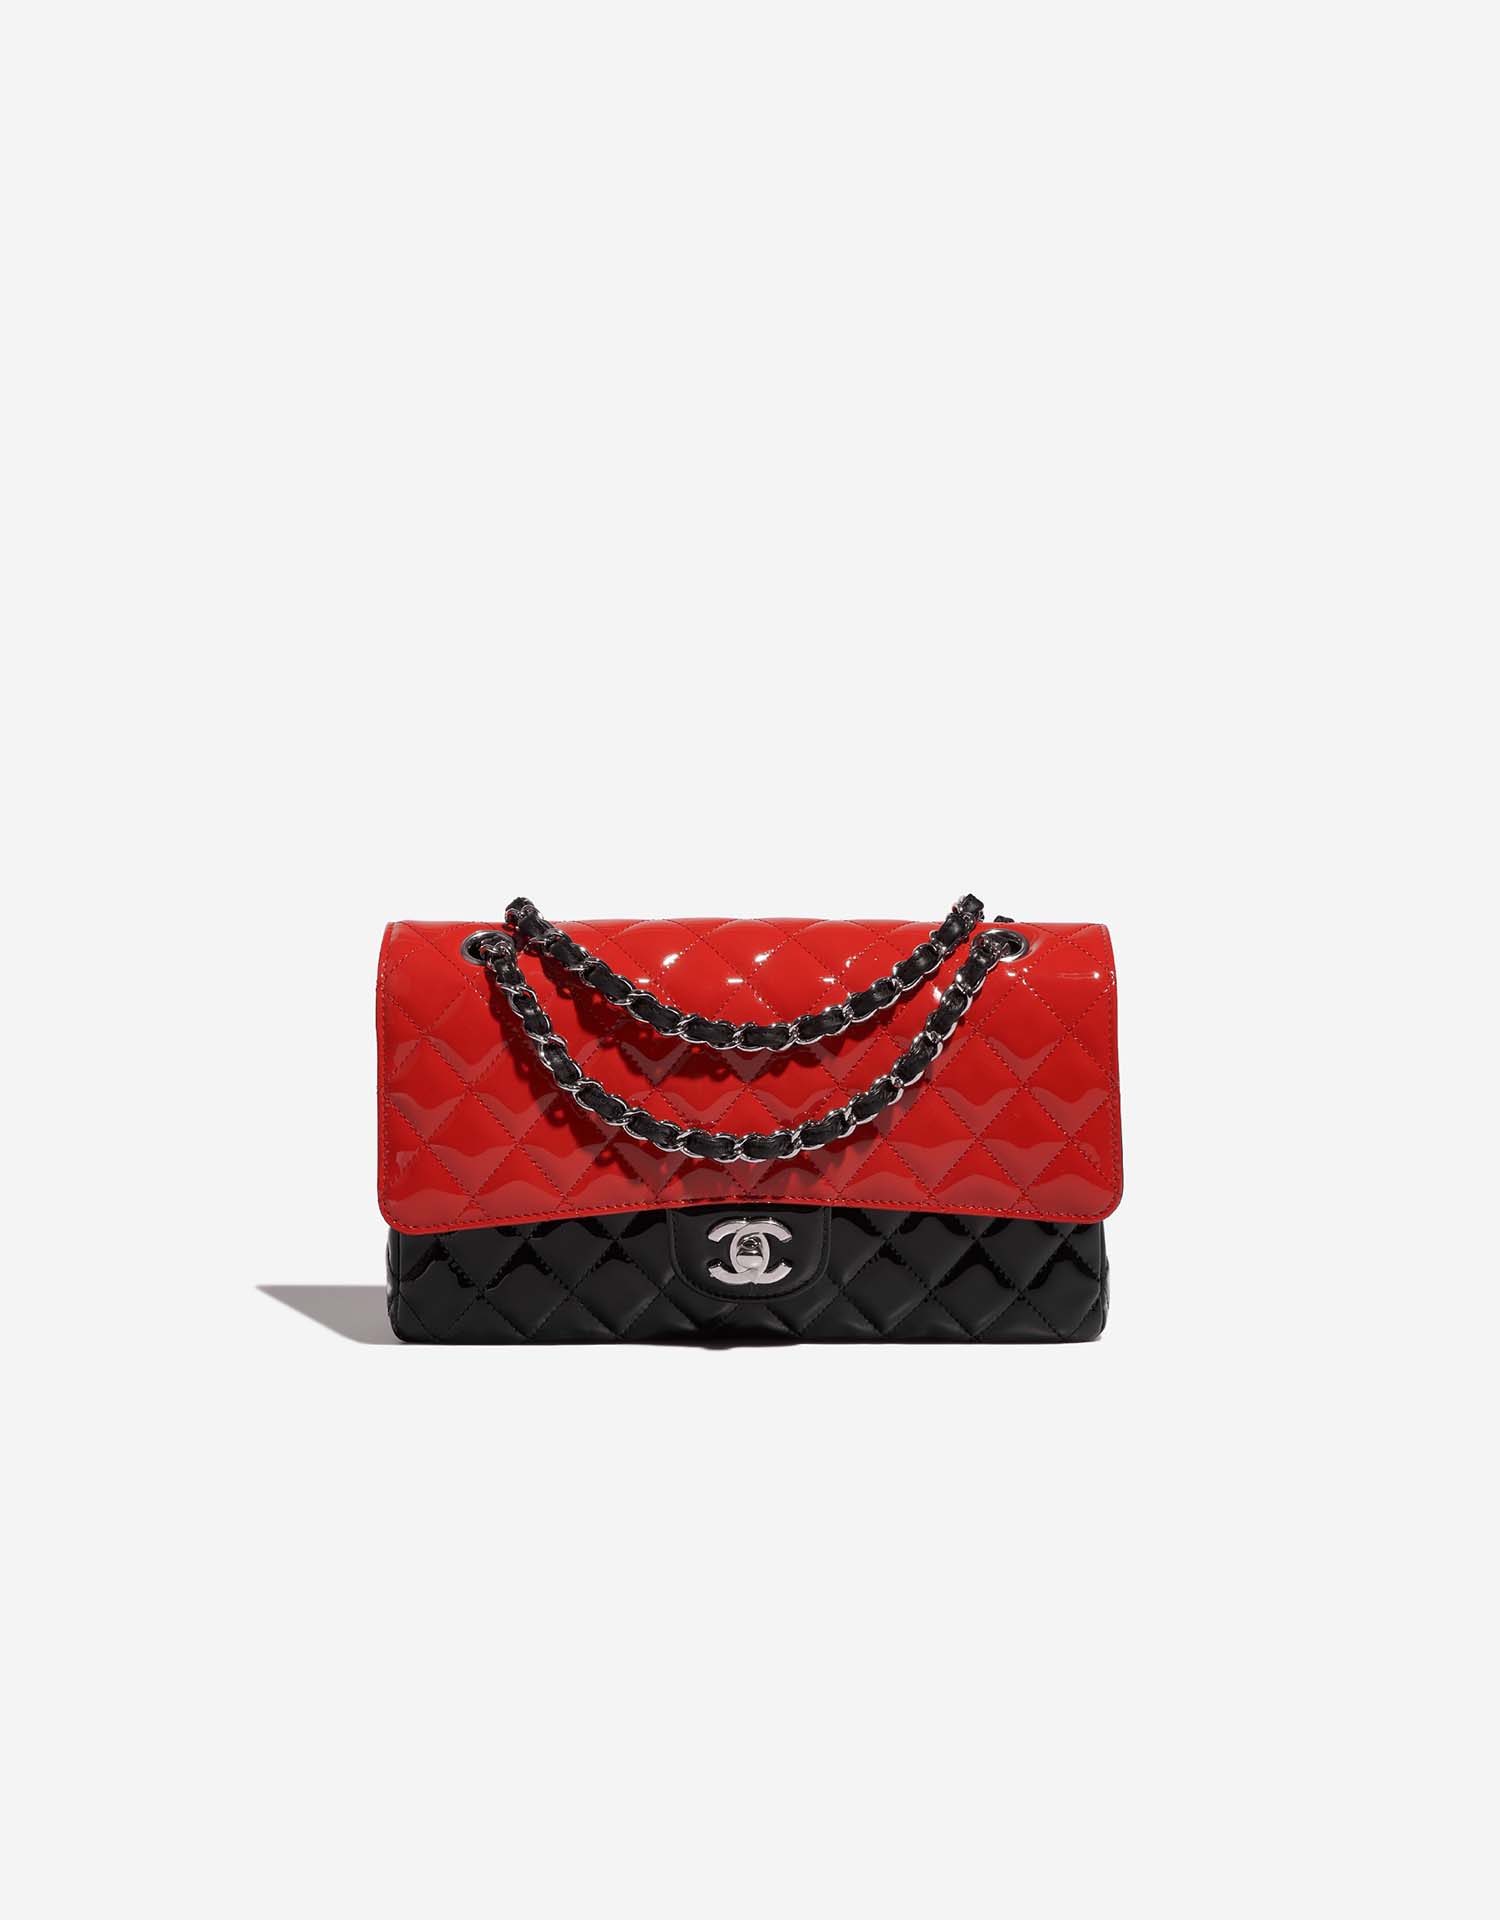 Chanel Timeless Medium Patent Black / Red